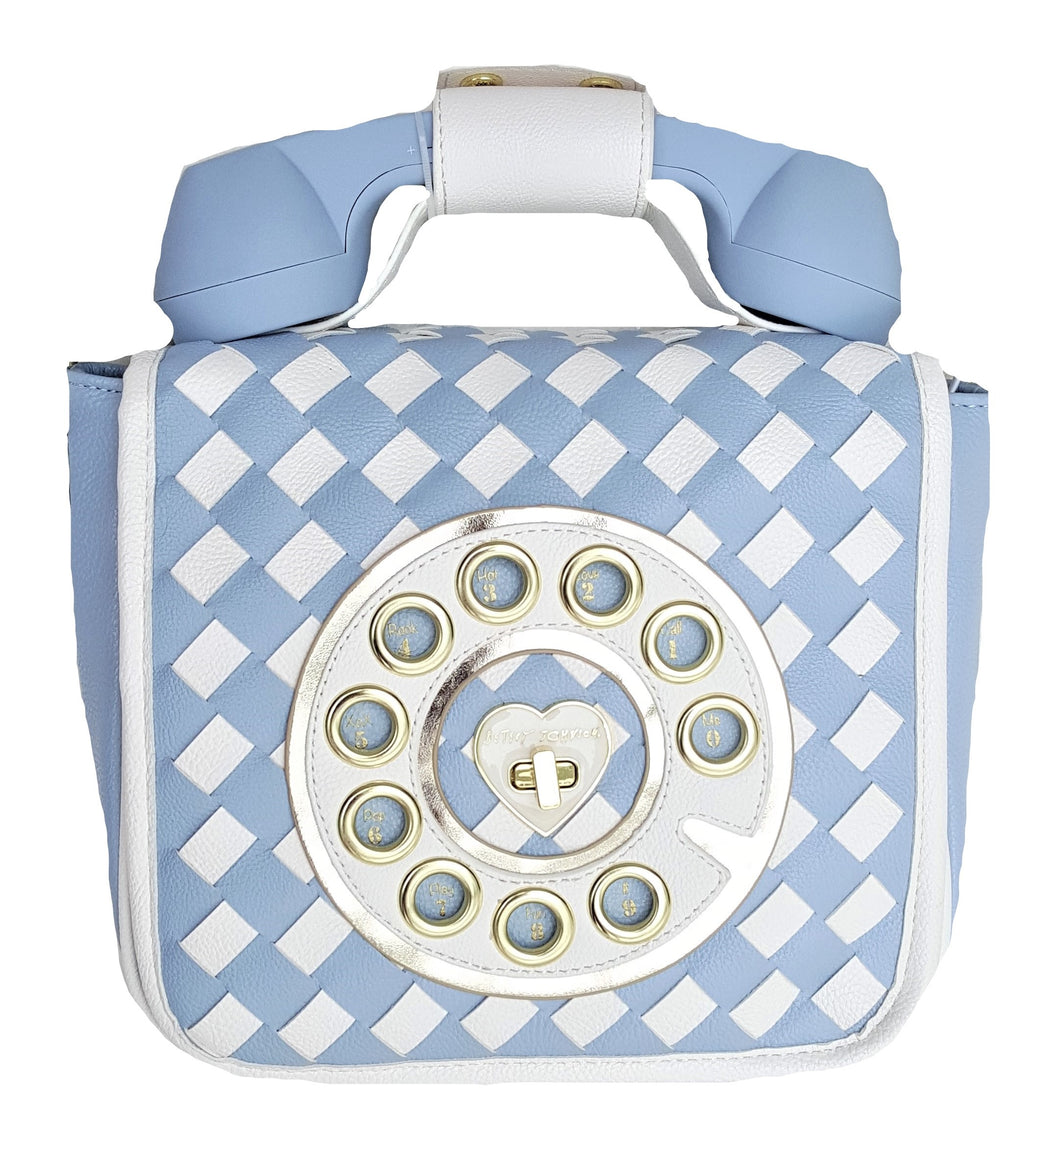 Betsey Johnson Crossbody Bag Phone Blue - Urban Flair USA